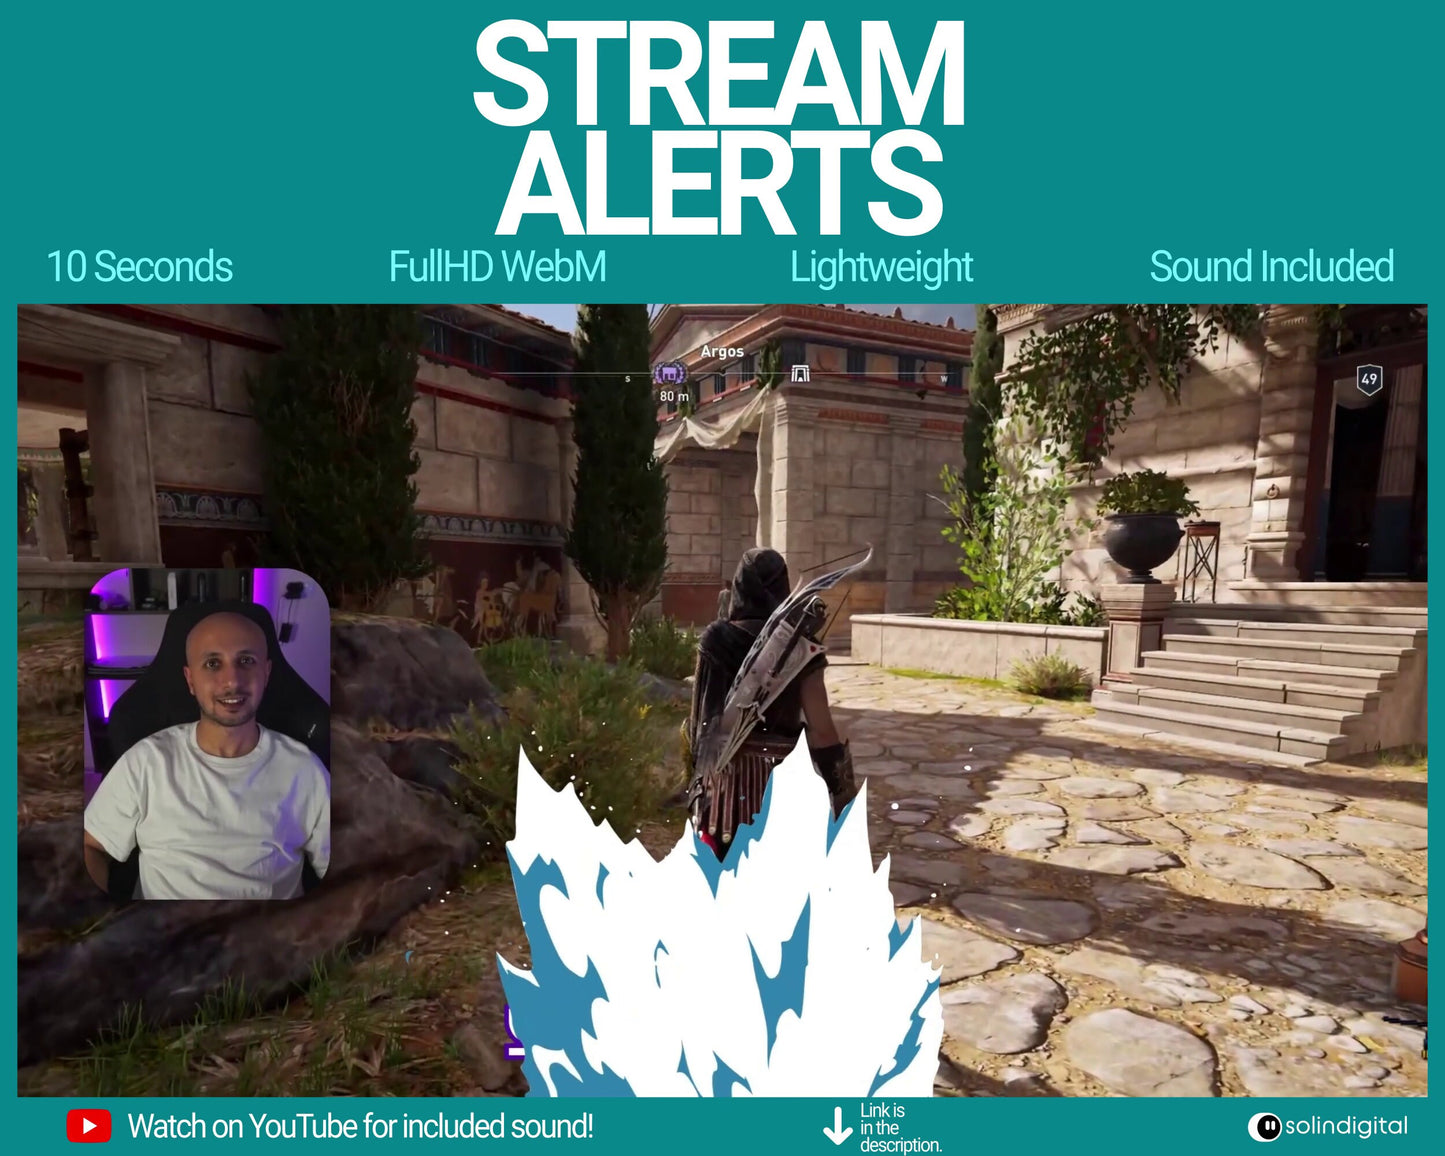 Water Ronin Pixel Alerts for Twitch Streams, Samurai Warrior Animated Alert Overlay, YouTube Facebook Kick